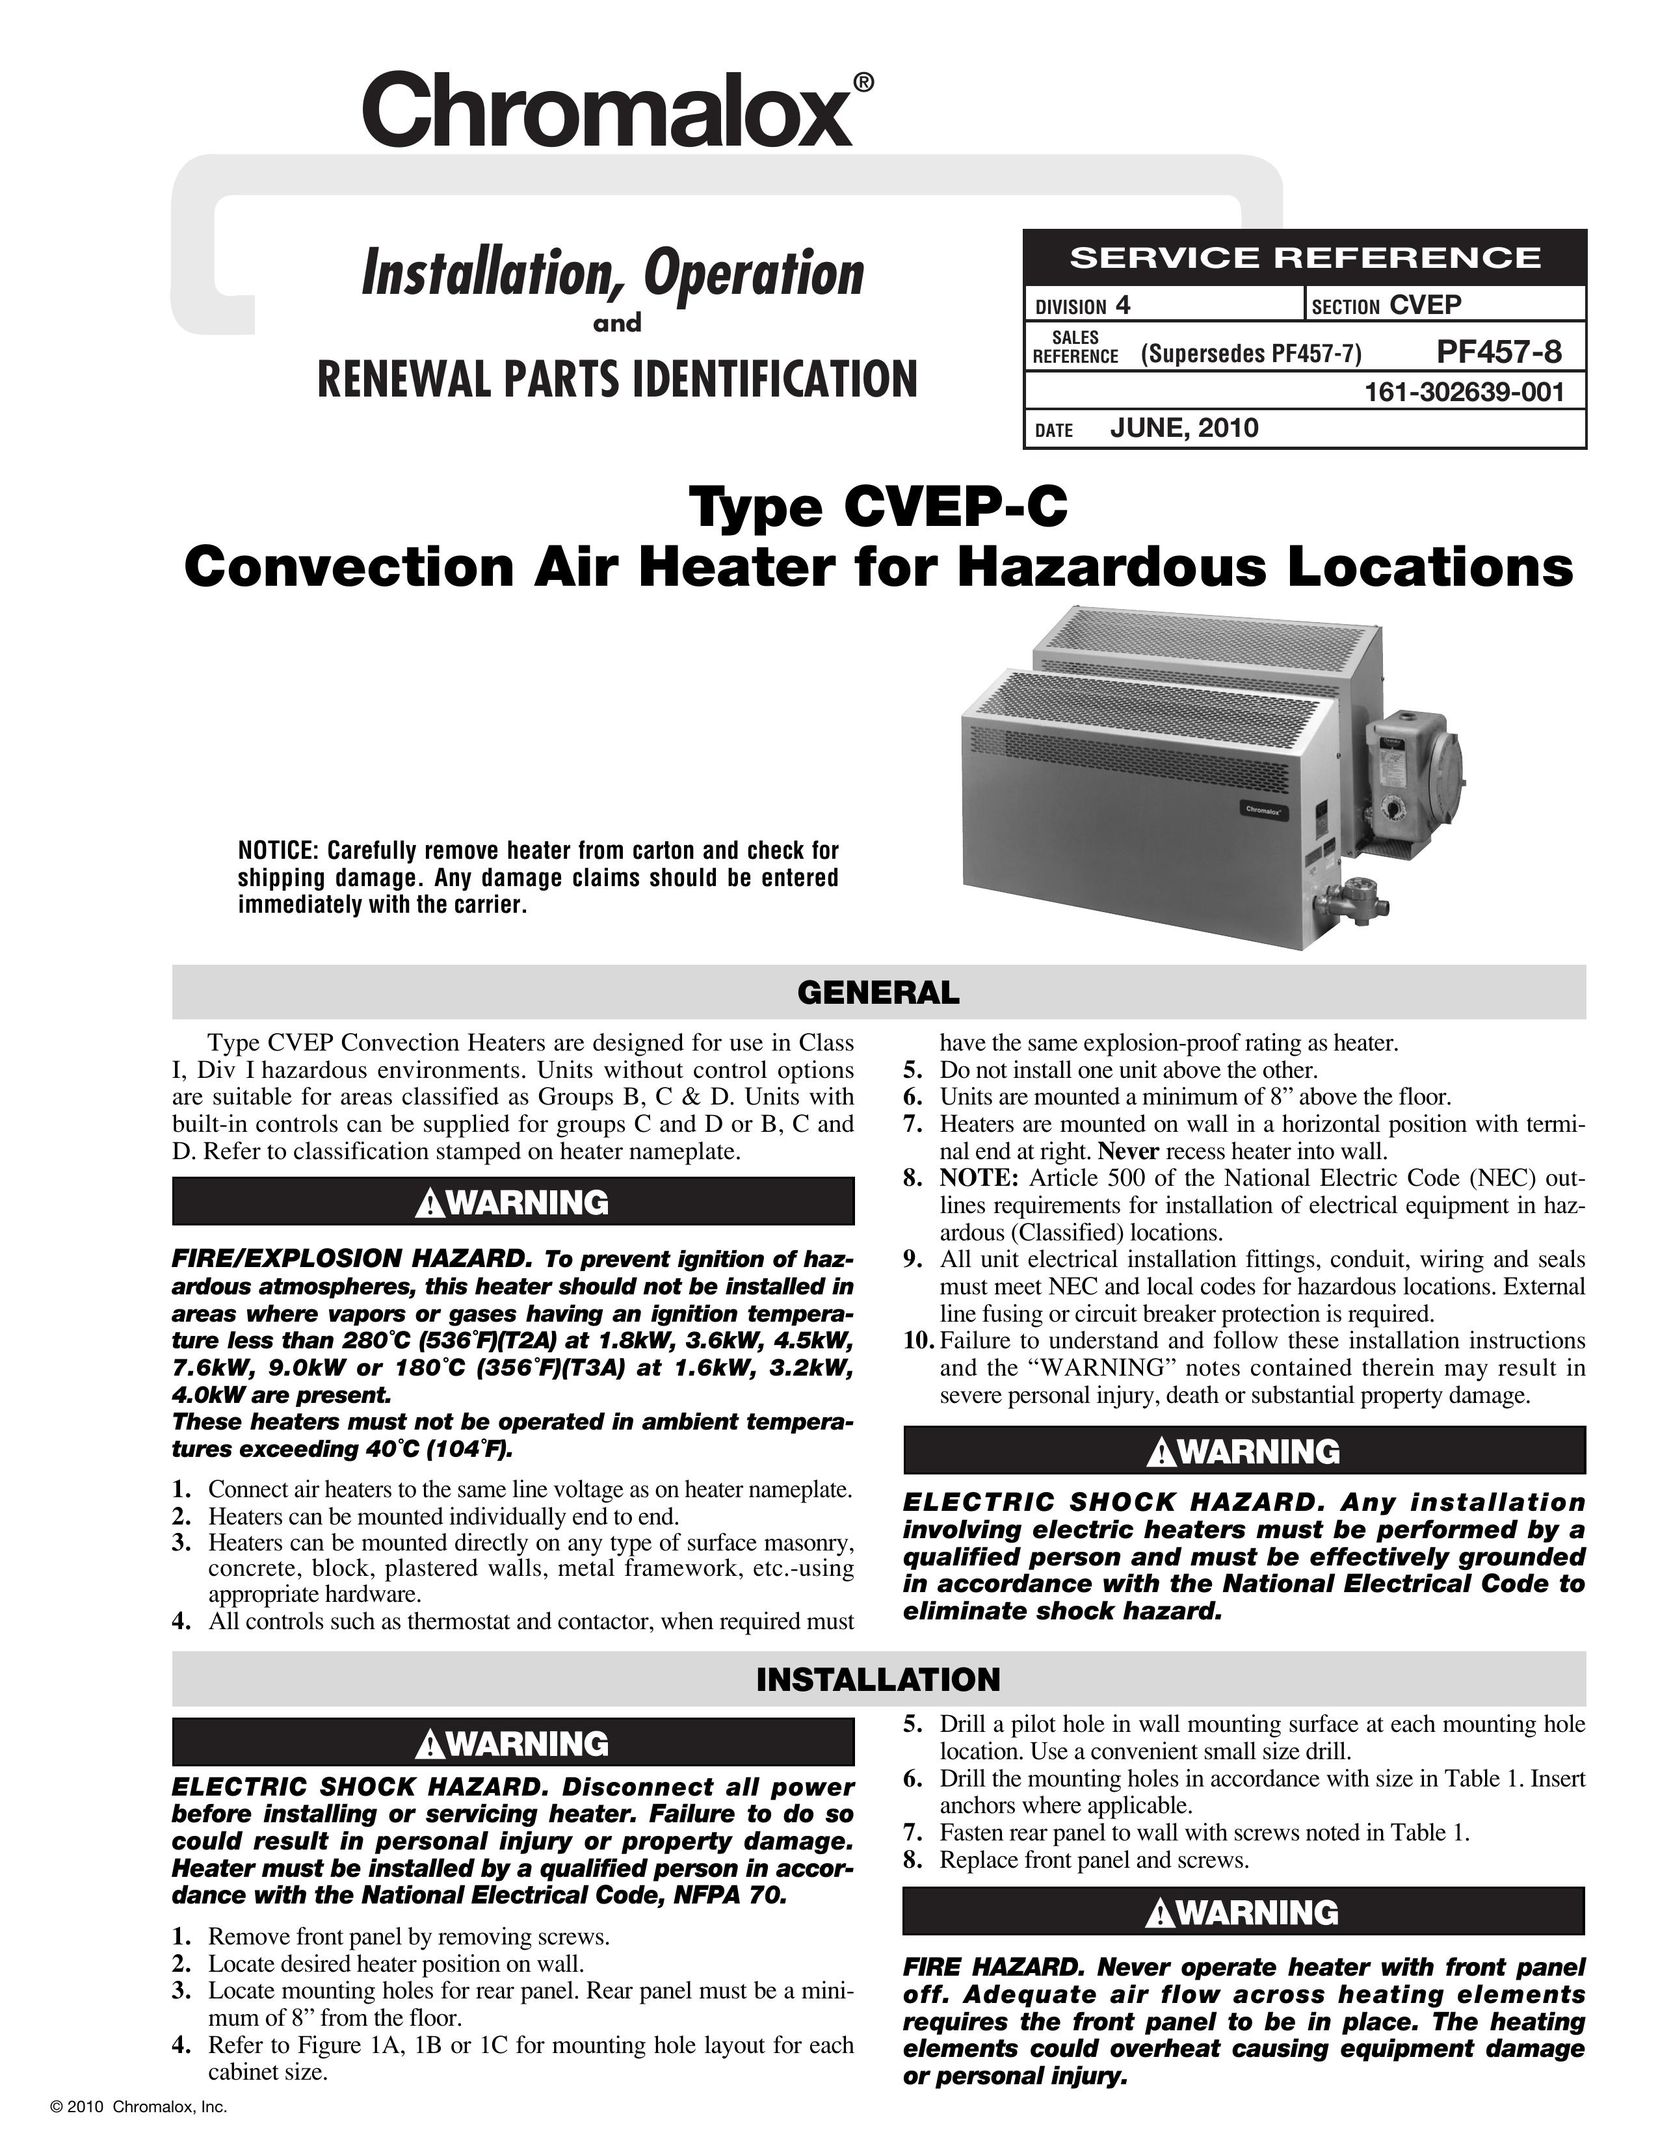 Chromalox CVEP-C Electric Heater User Manual